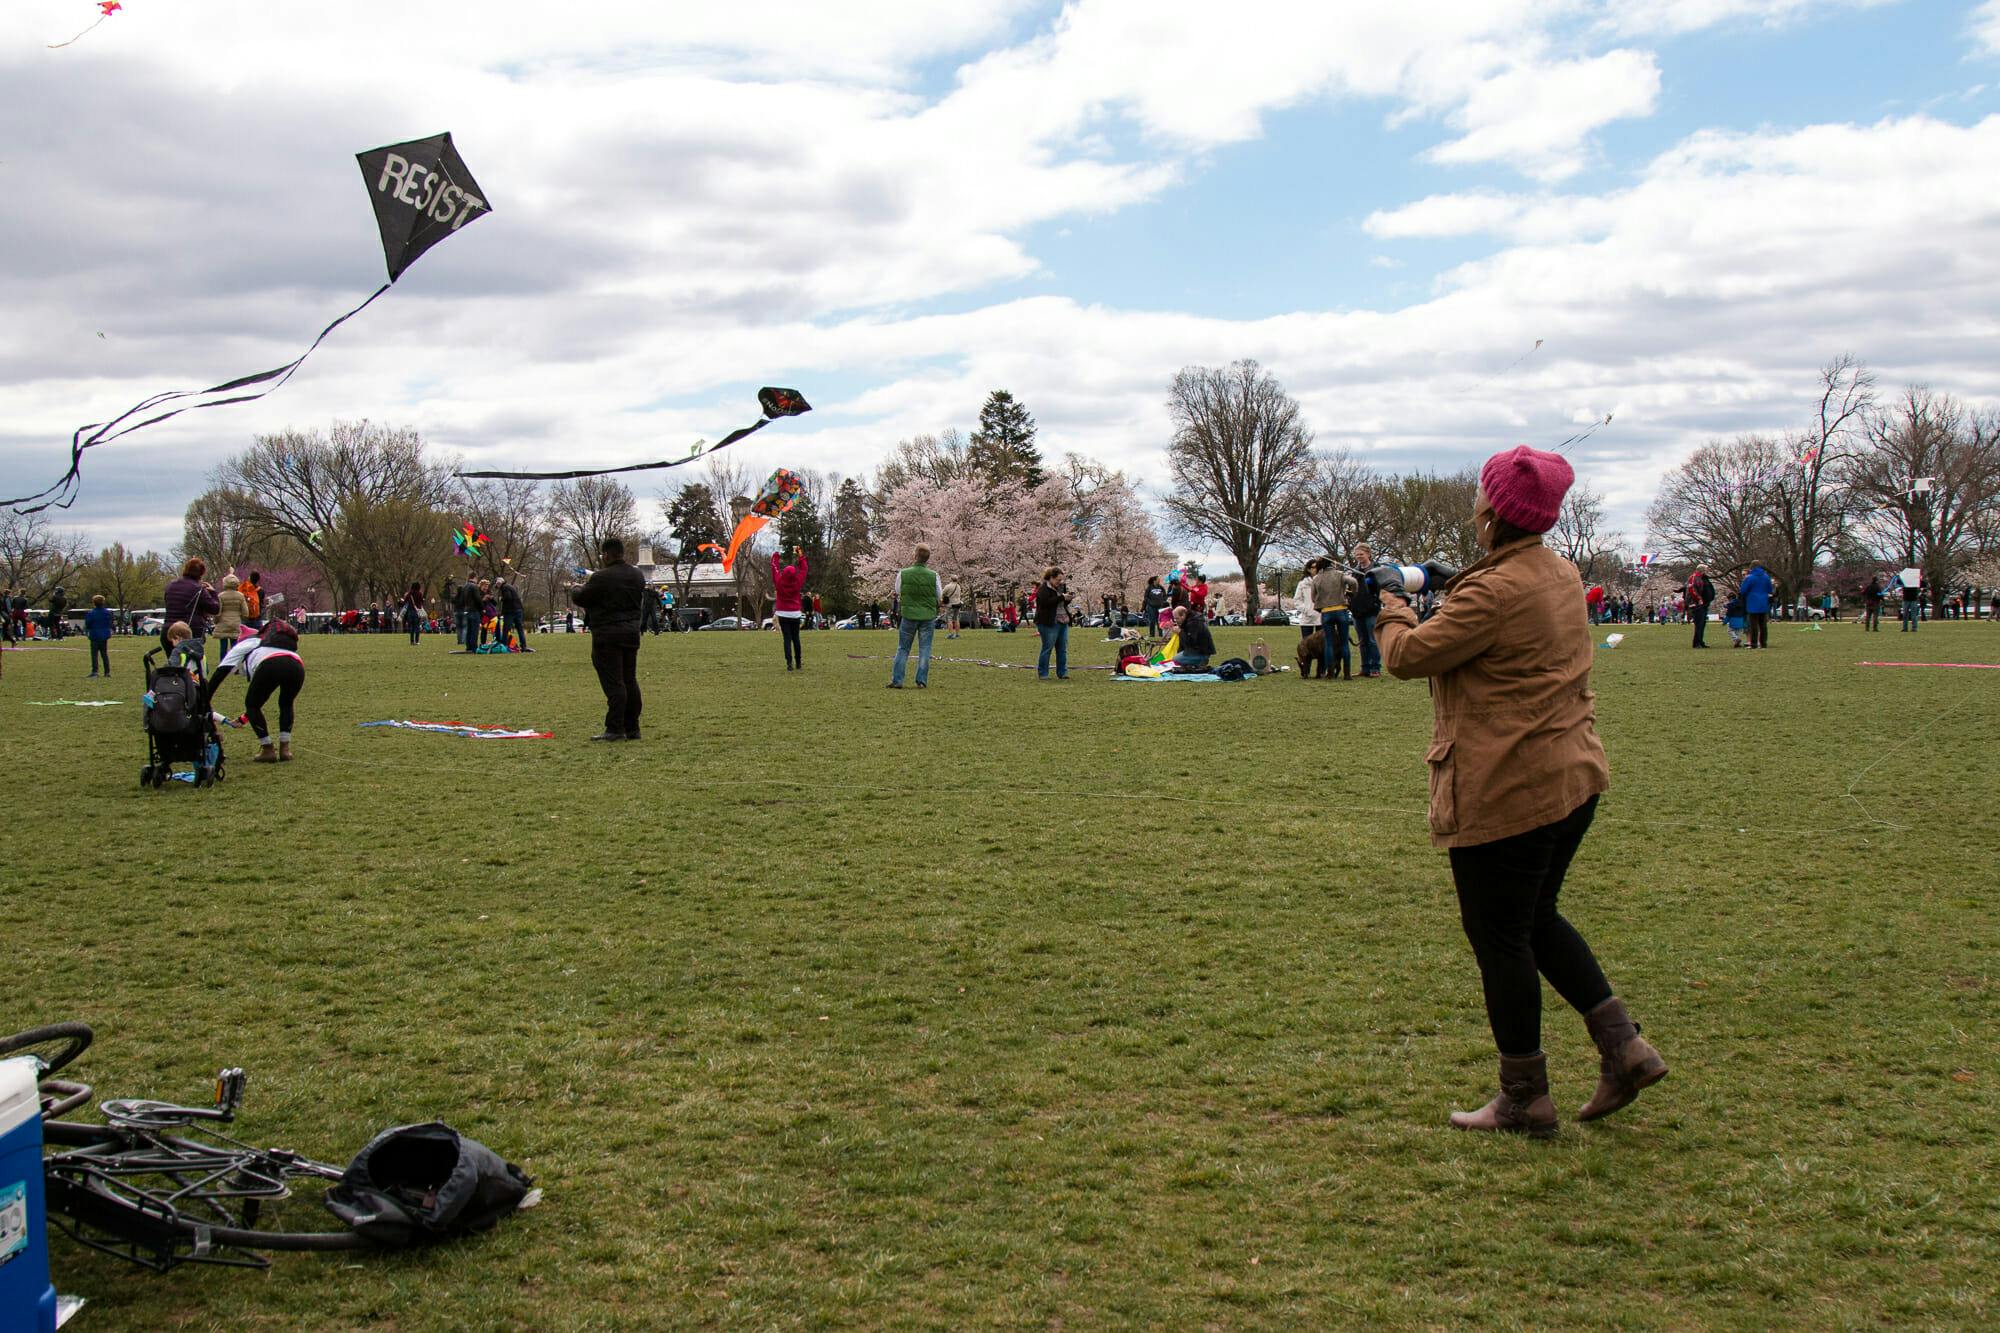 Trump protest at kite festival